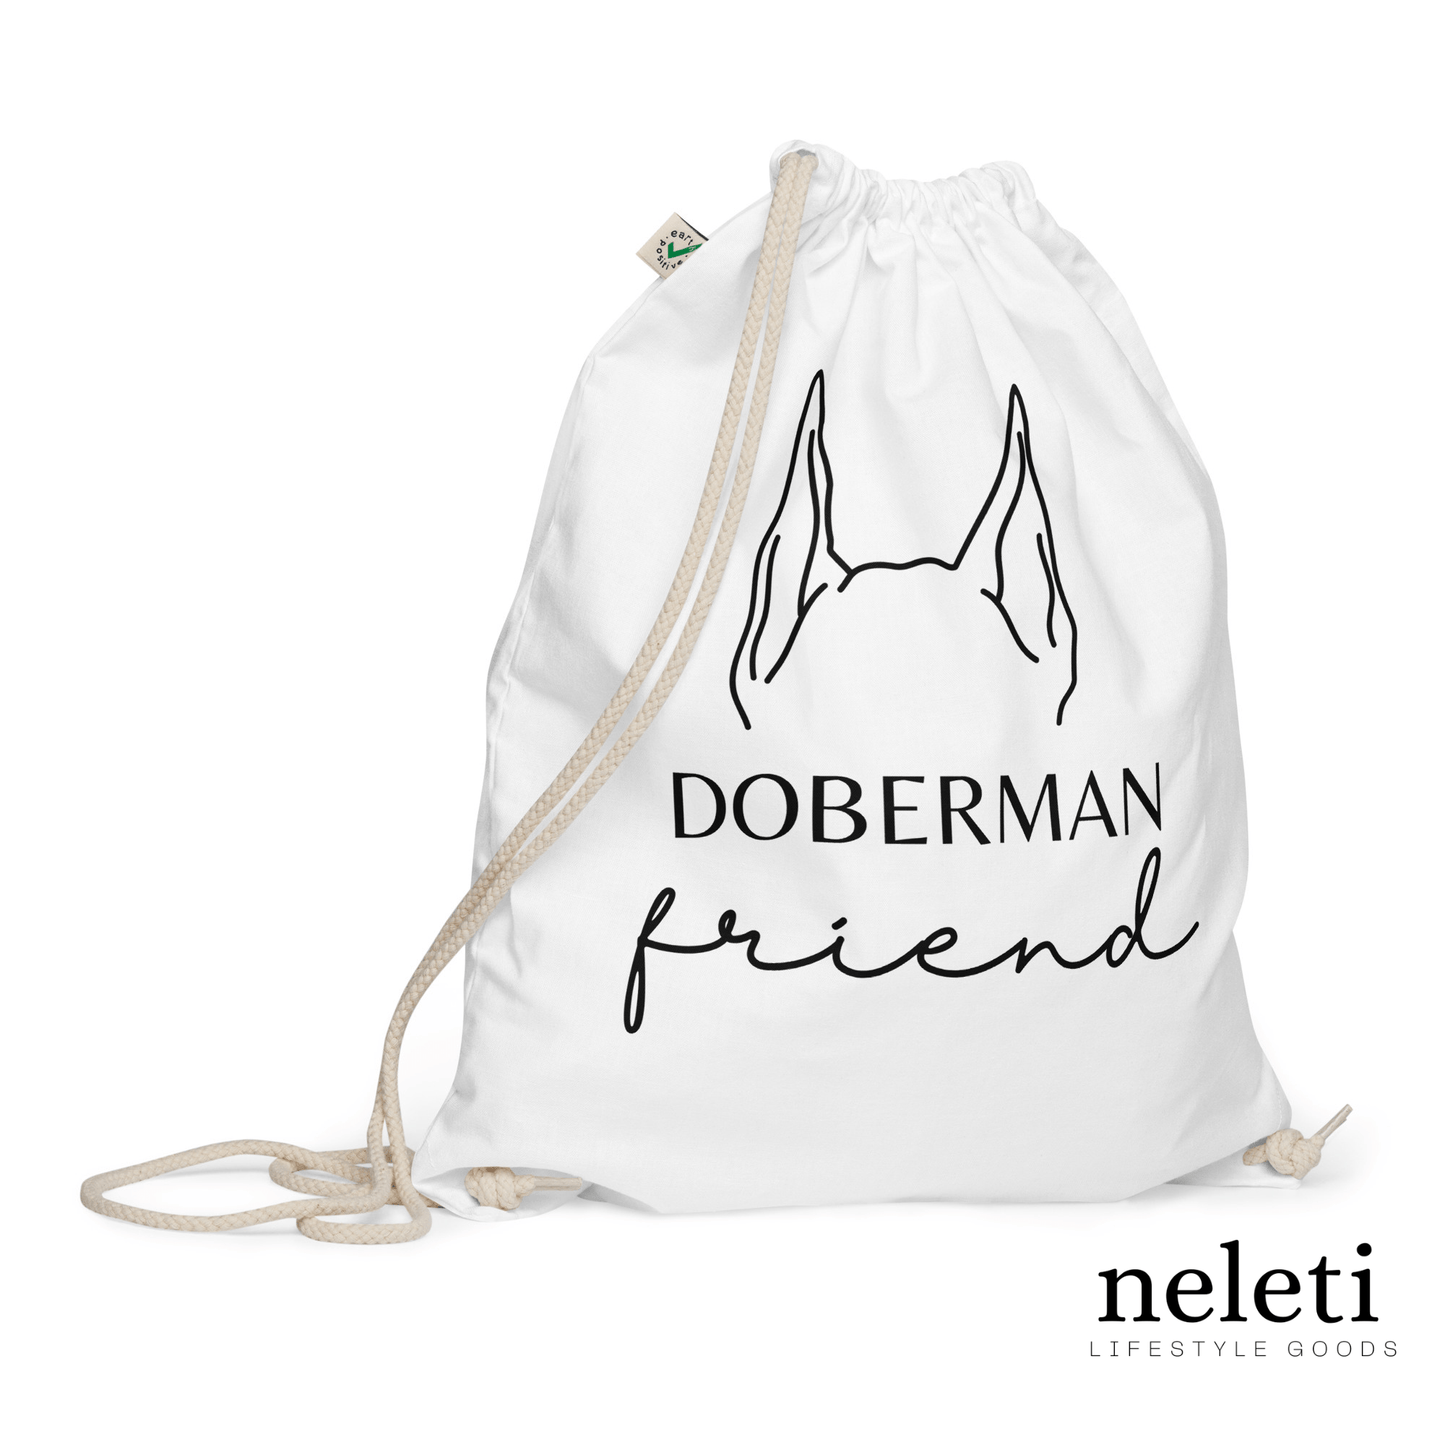 neleti.com-Doberman-Ears-on-White-Organic-Cotton-Drawstring-Bag